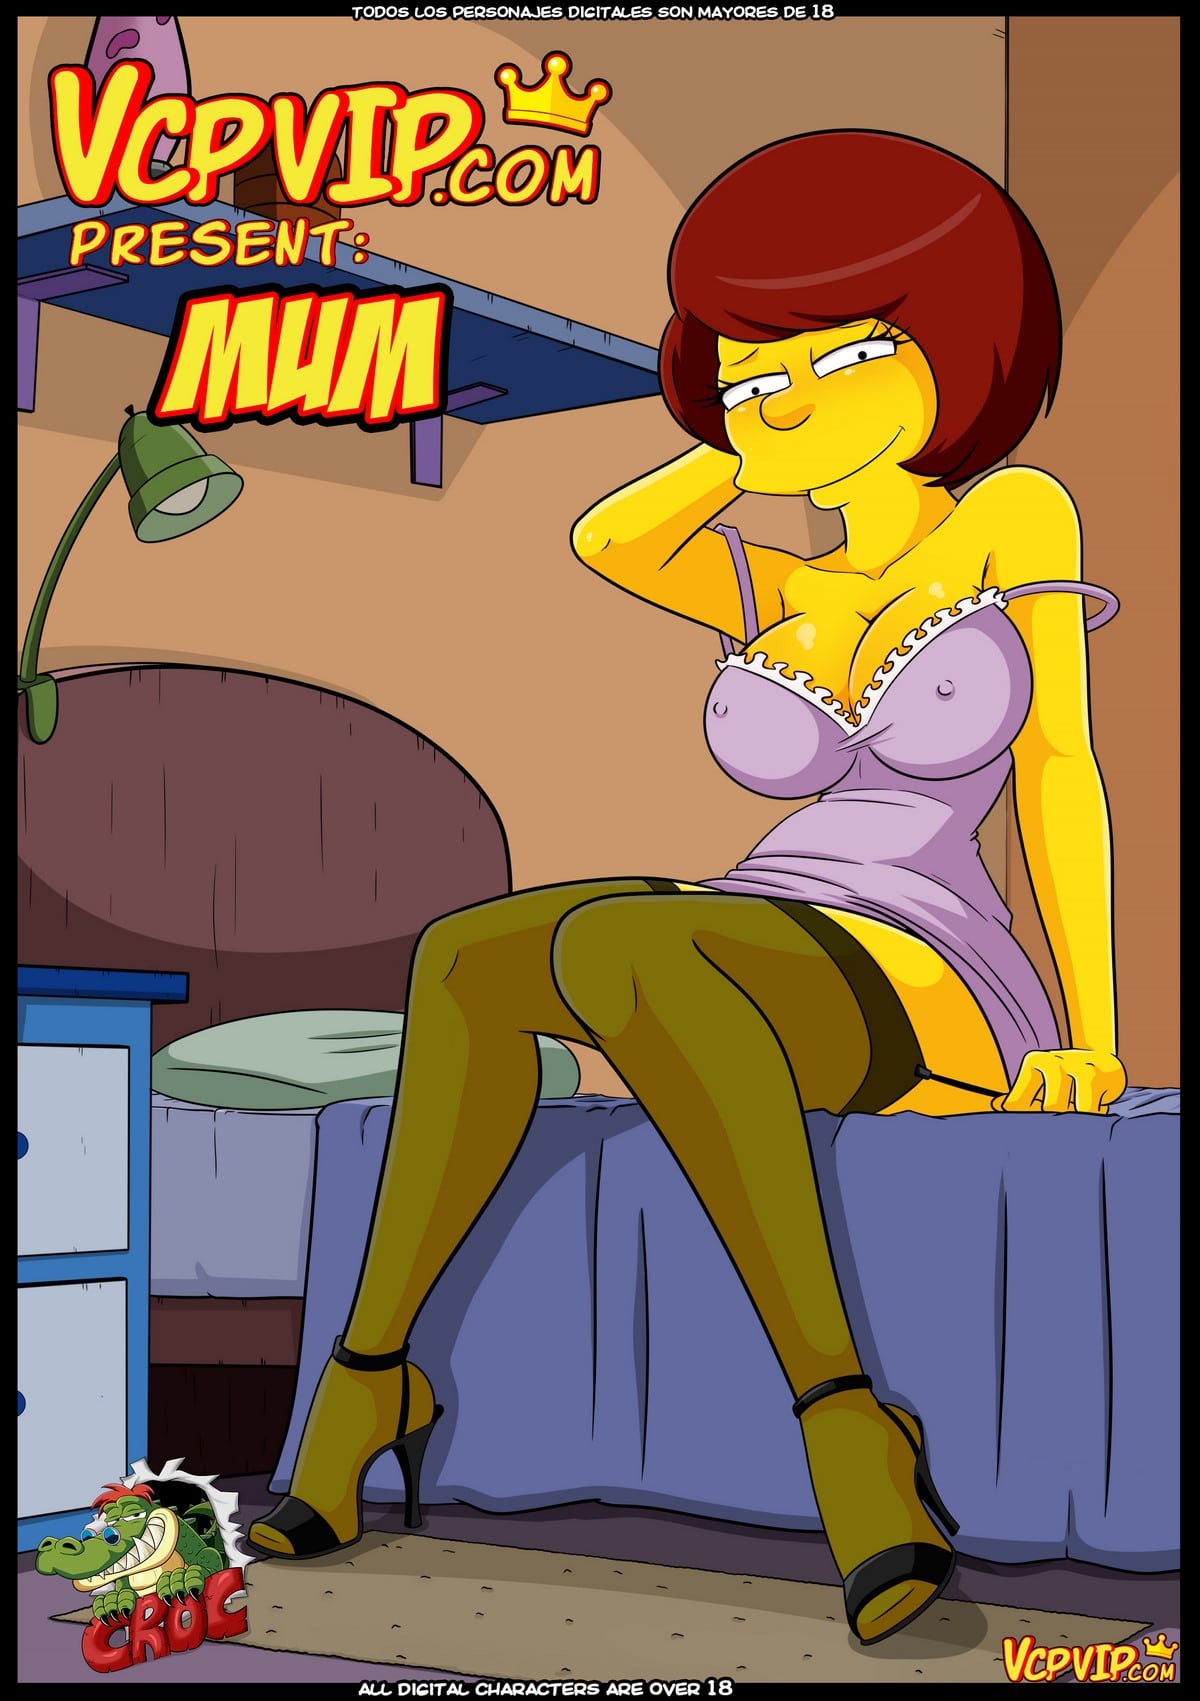 Simpsons xxxcomics